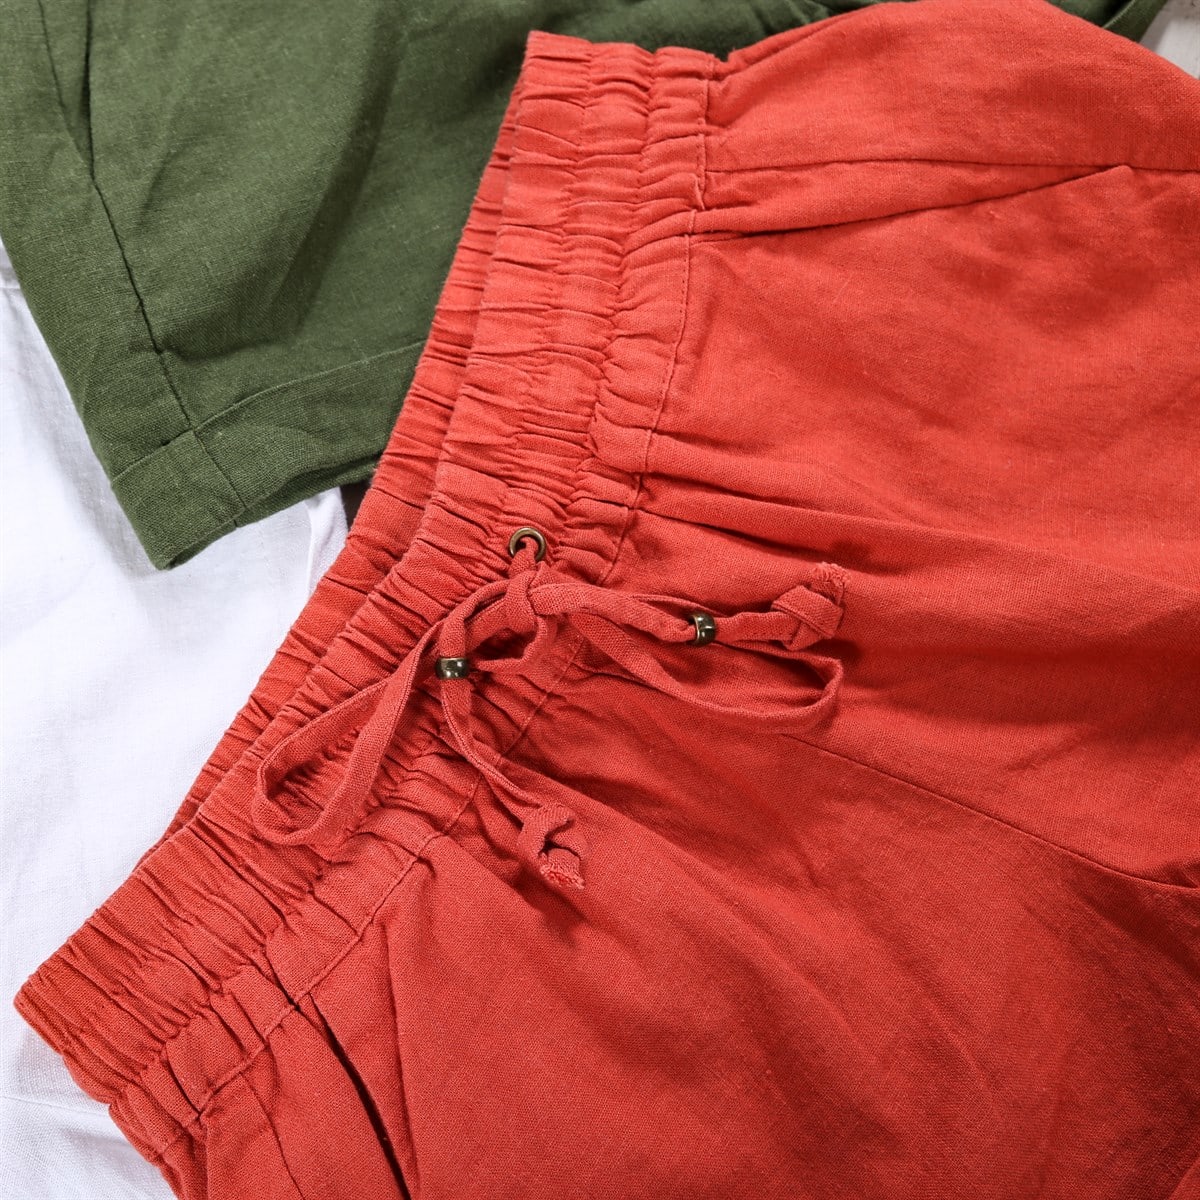 Spring Linen Shorts feature